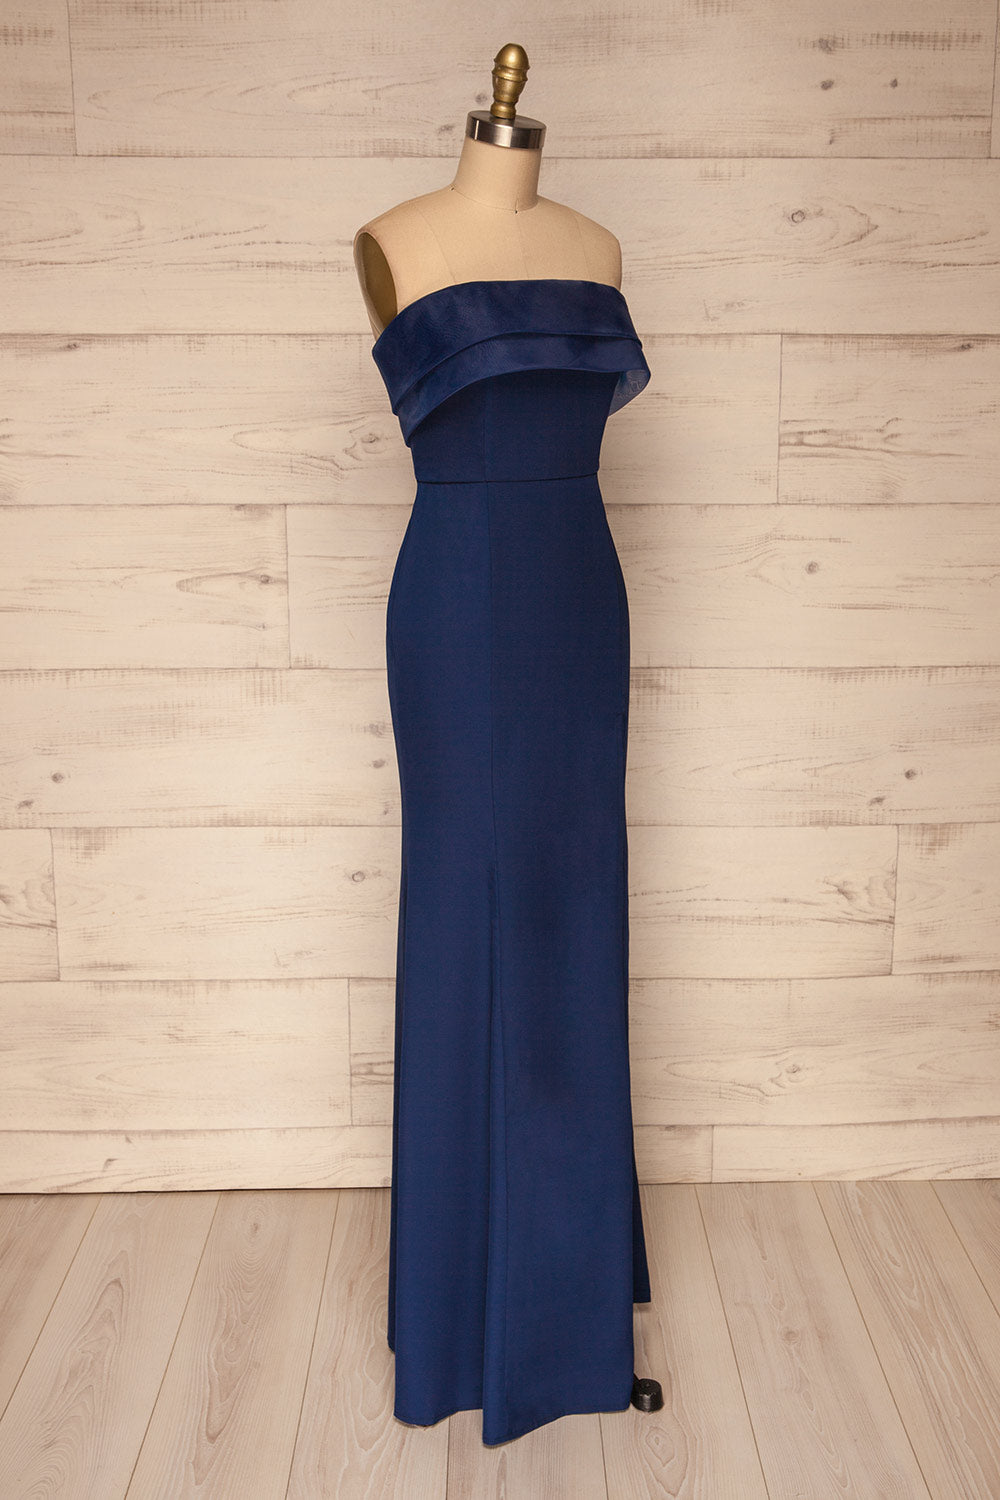 Rezina Navy Blue Strapless Maxi Dress side view | La petite garçonne